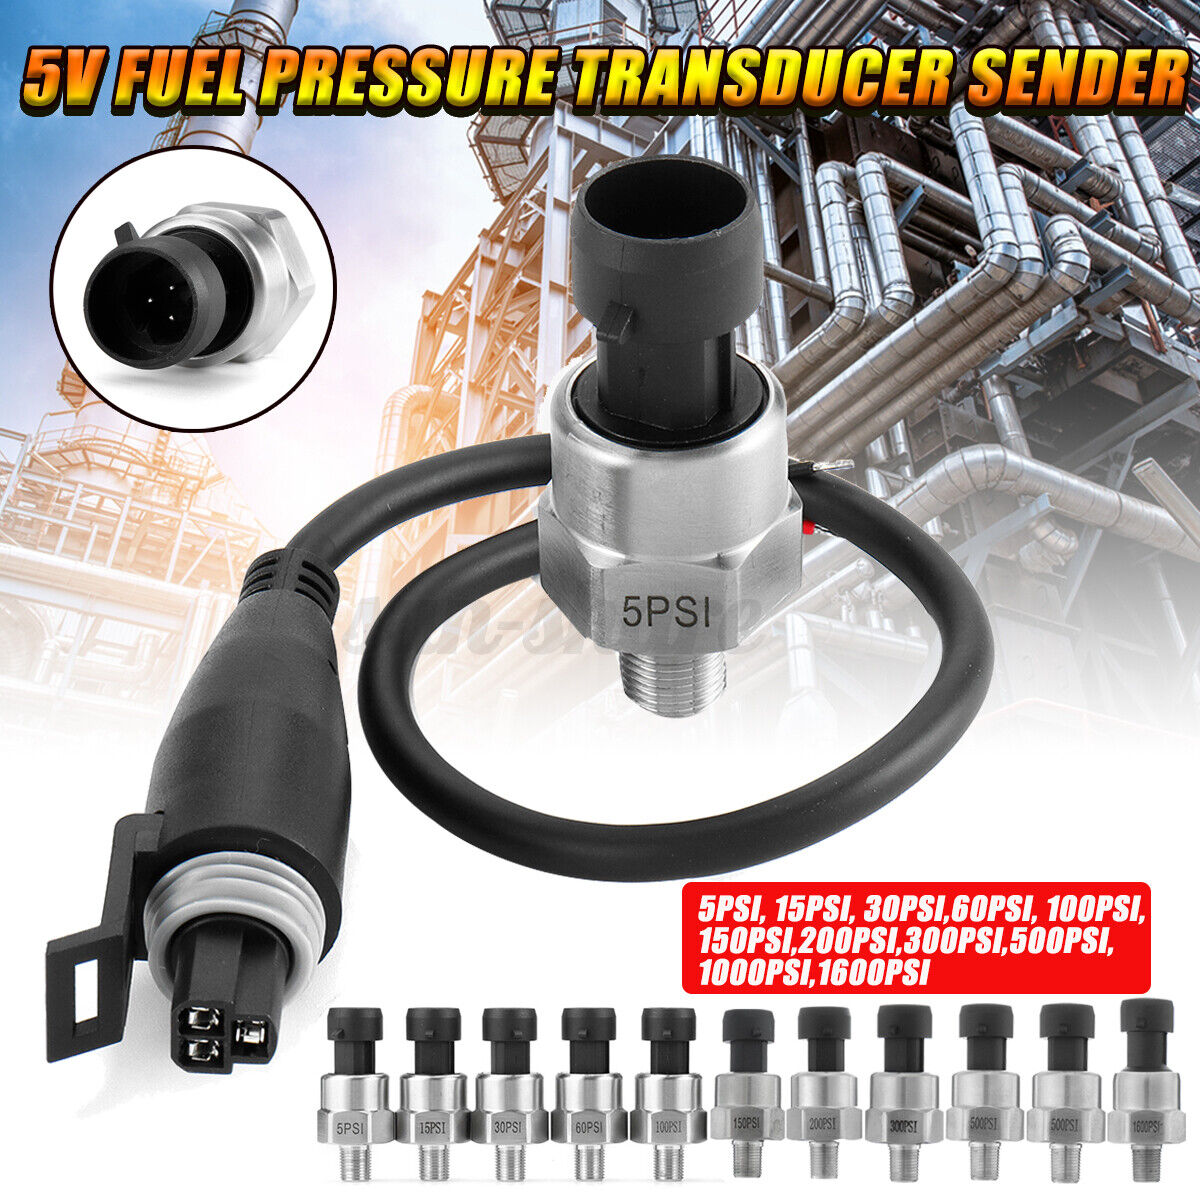 1/8NPT\'\' 5-1600 PSI Fuel Pressure Transducer Sender 5V For Oil Fuel Ai